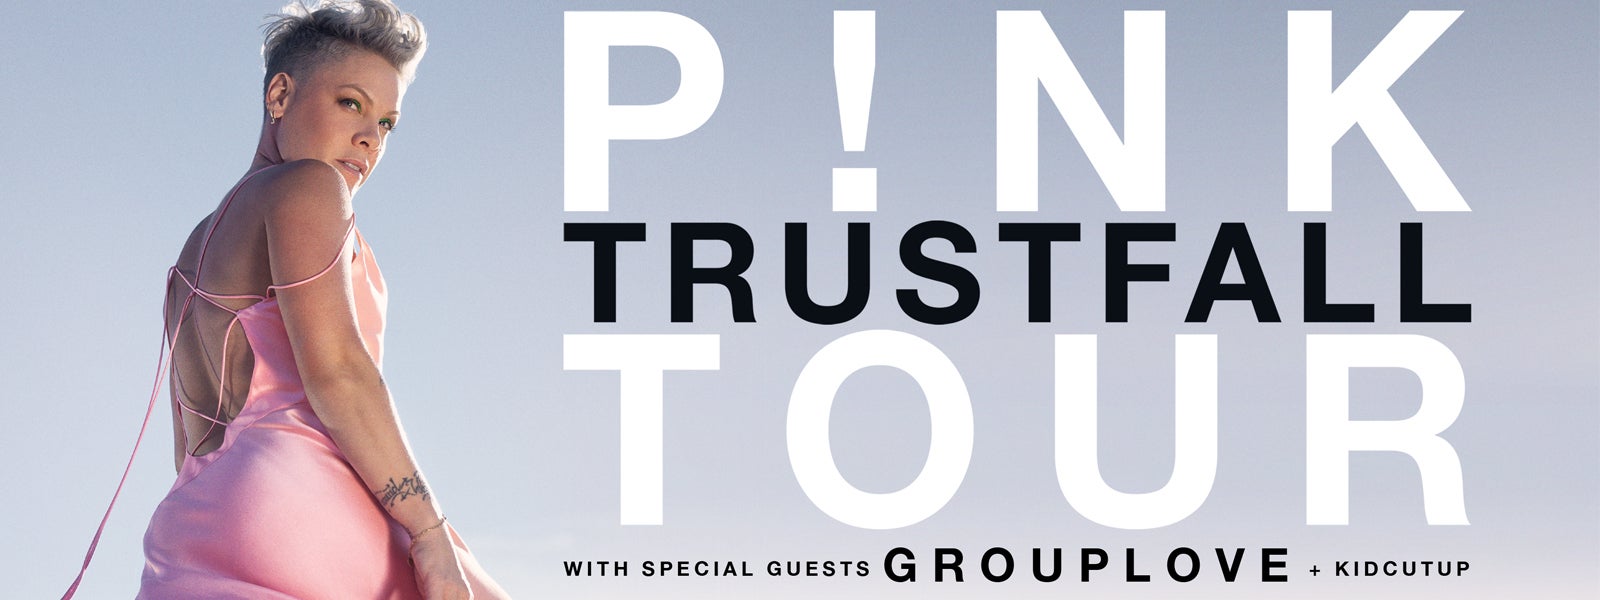 P!NK: TRUSTFALL TOUR 